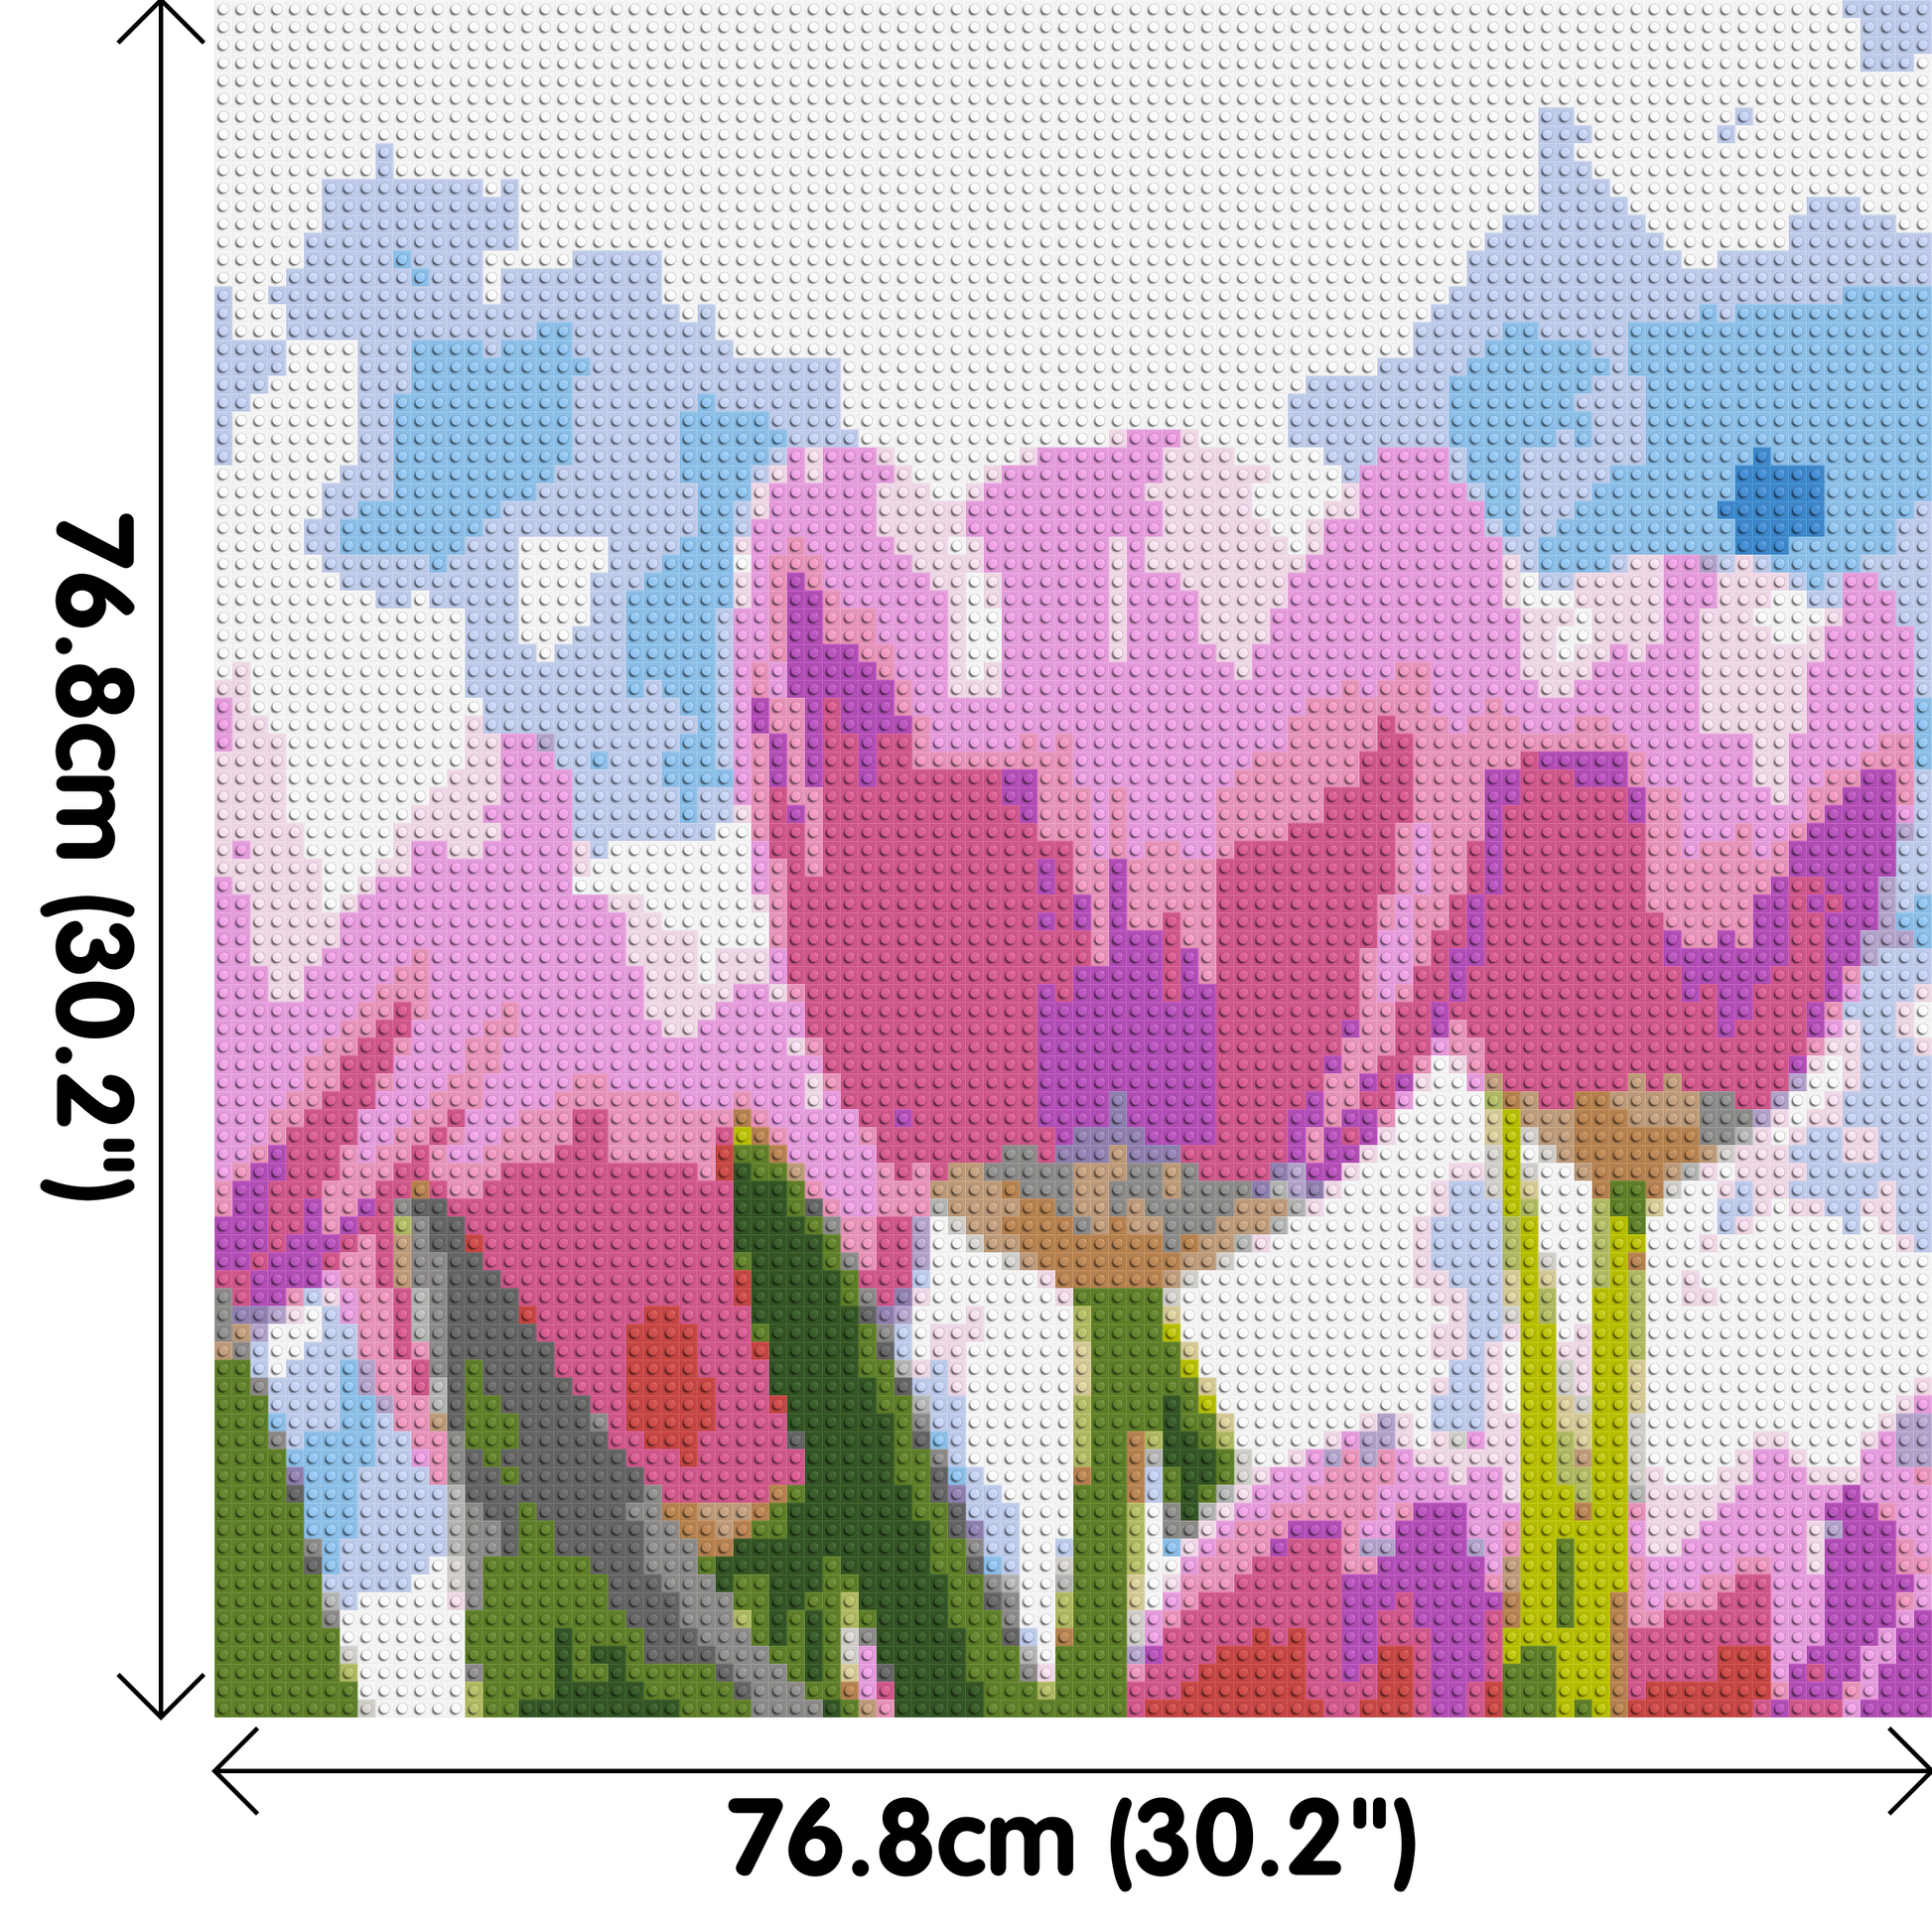 Pink Tulips - Brick Art Mosaic Kit 4x4 dimensions